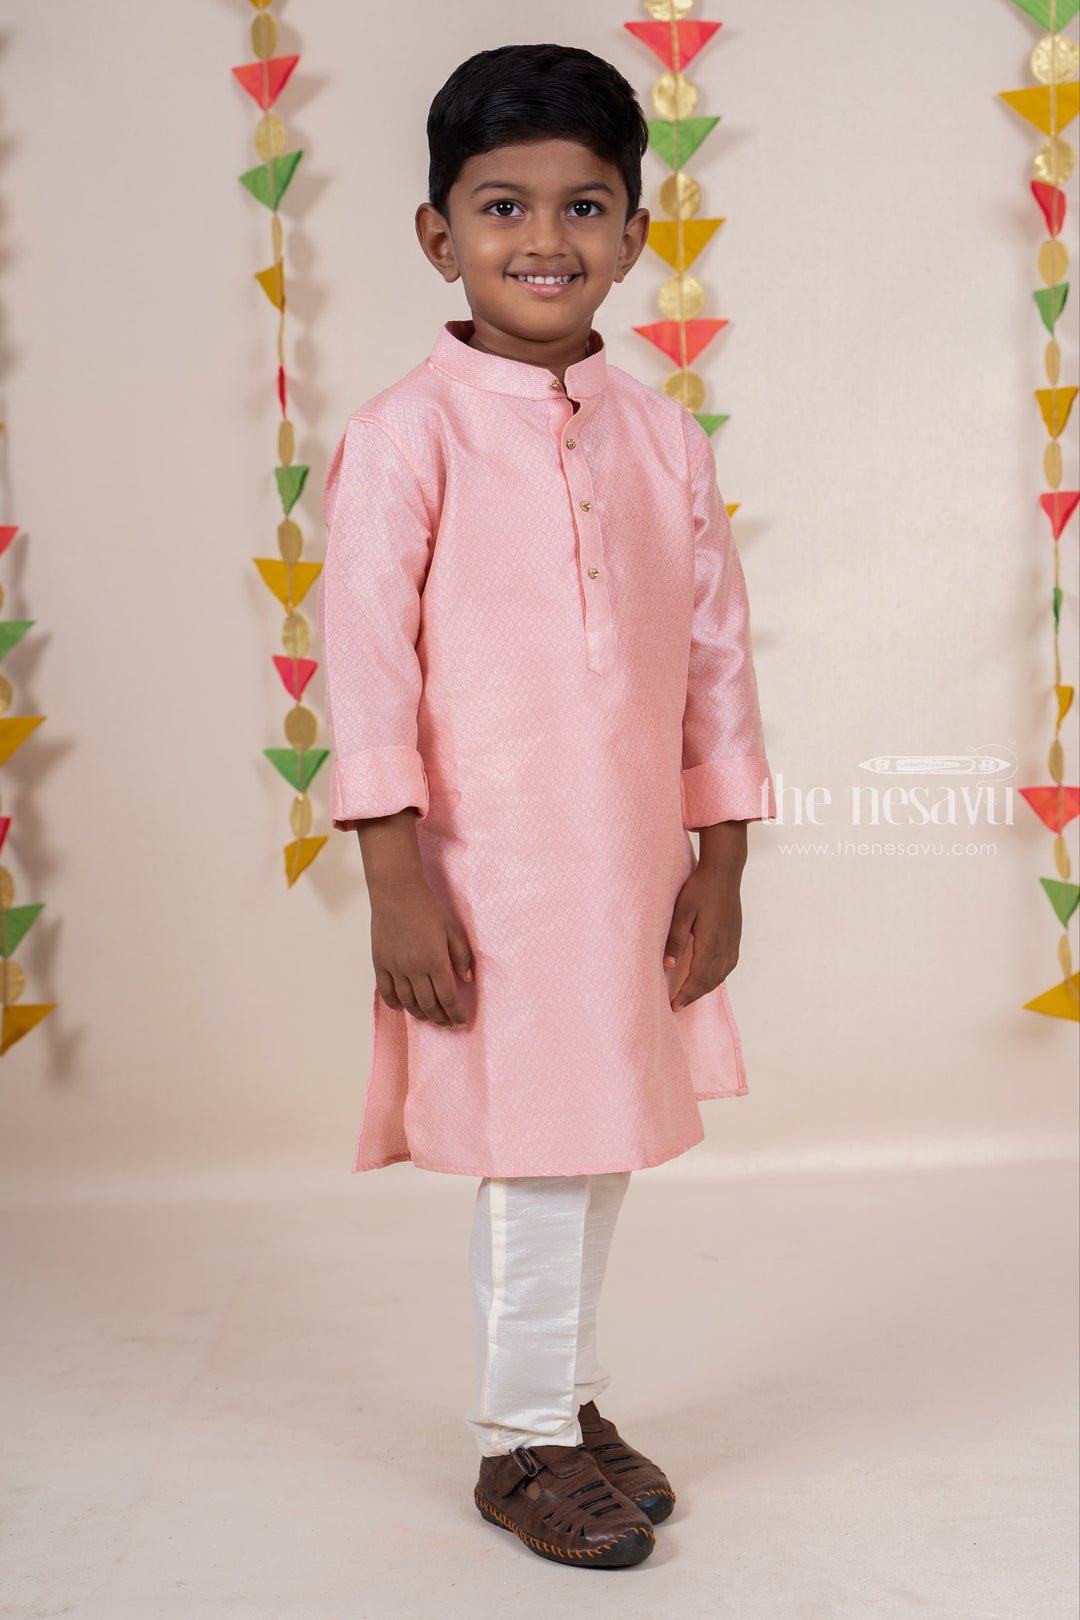 The Nesavu Ethnic Sets Peach Pink Silk Cotton Kurta Dresses For Baby Boys psr silks Nesavu